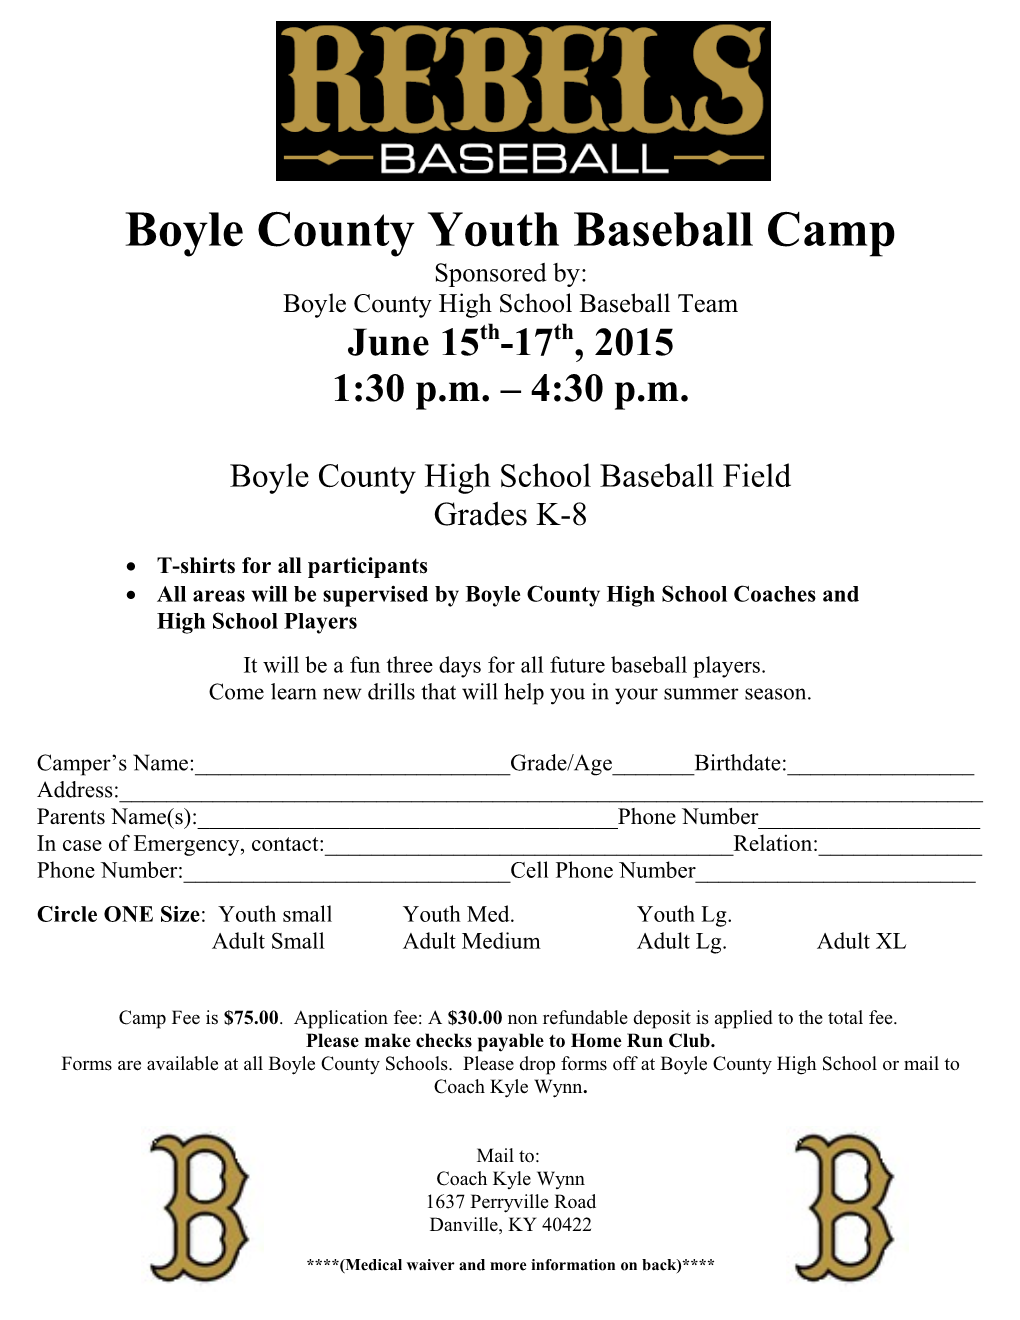 Boyle County Youth Baseball Camp